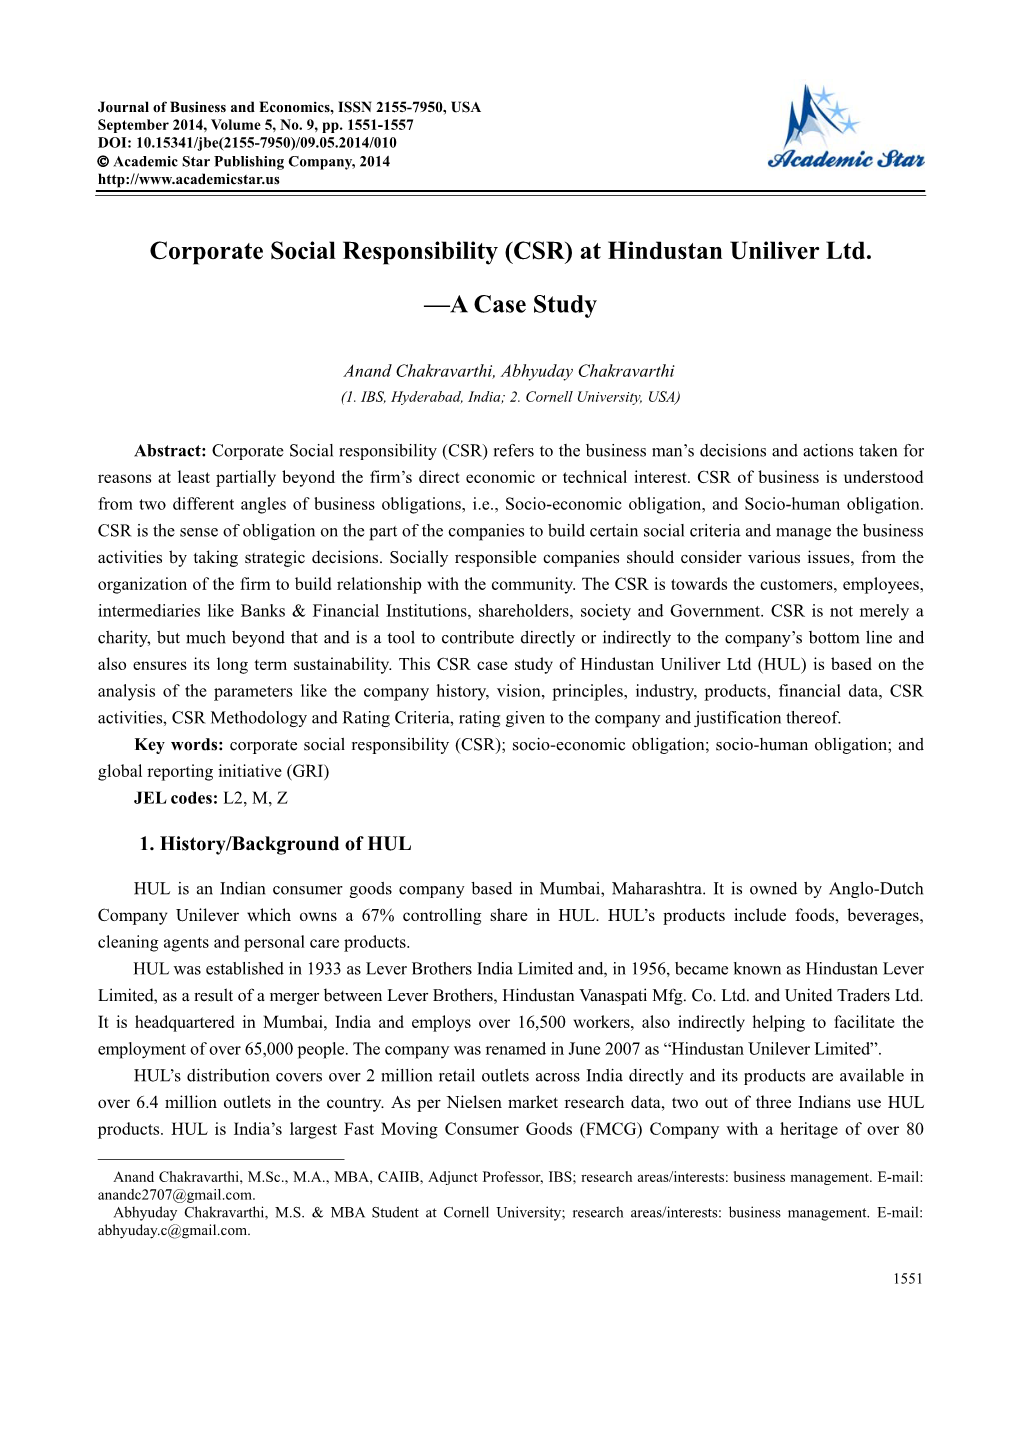 Corporate Social Responsibility (CSR) at Hindustan Uniliver Ltd